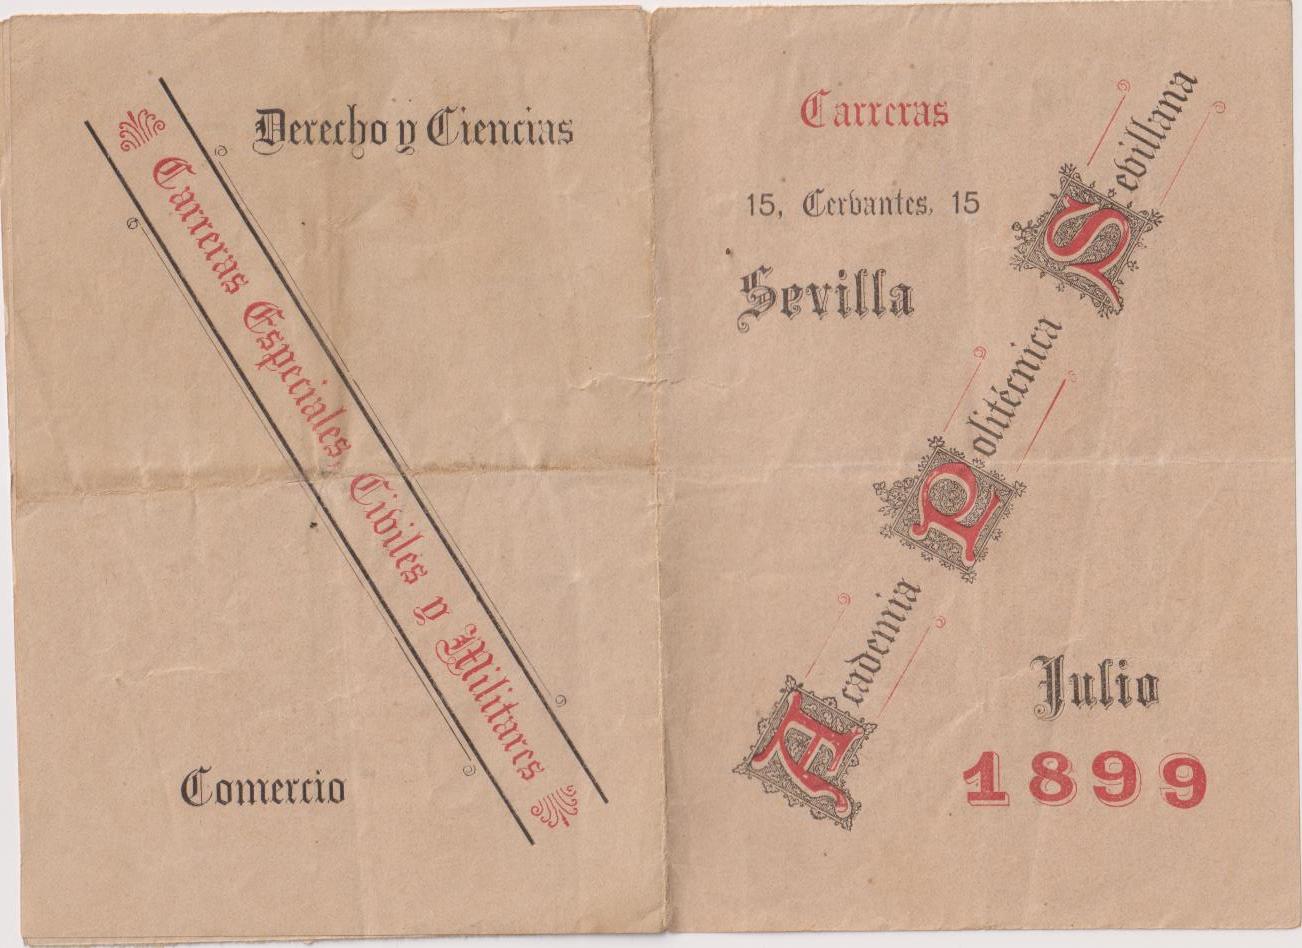 Academia Politécnica Sevillana. Carreras. Julio 1899